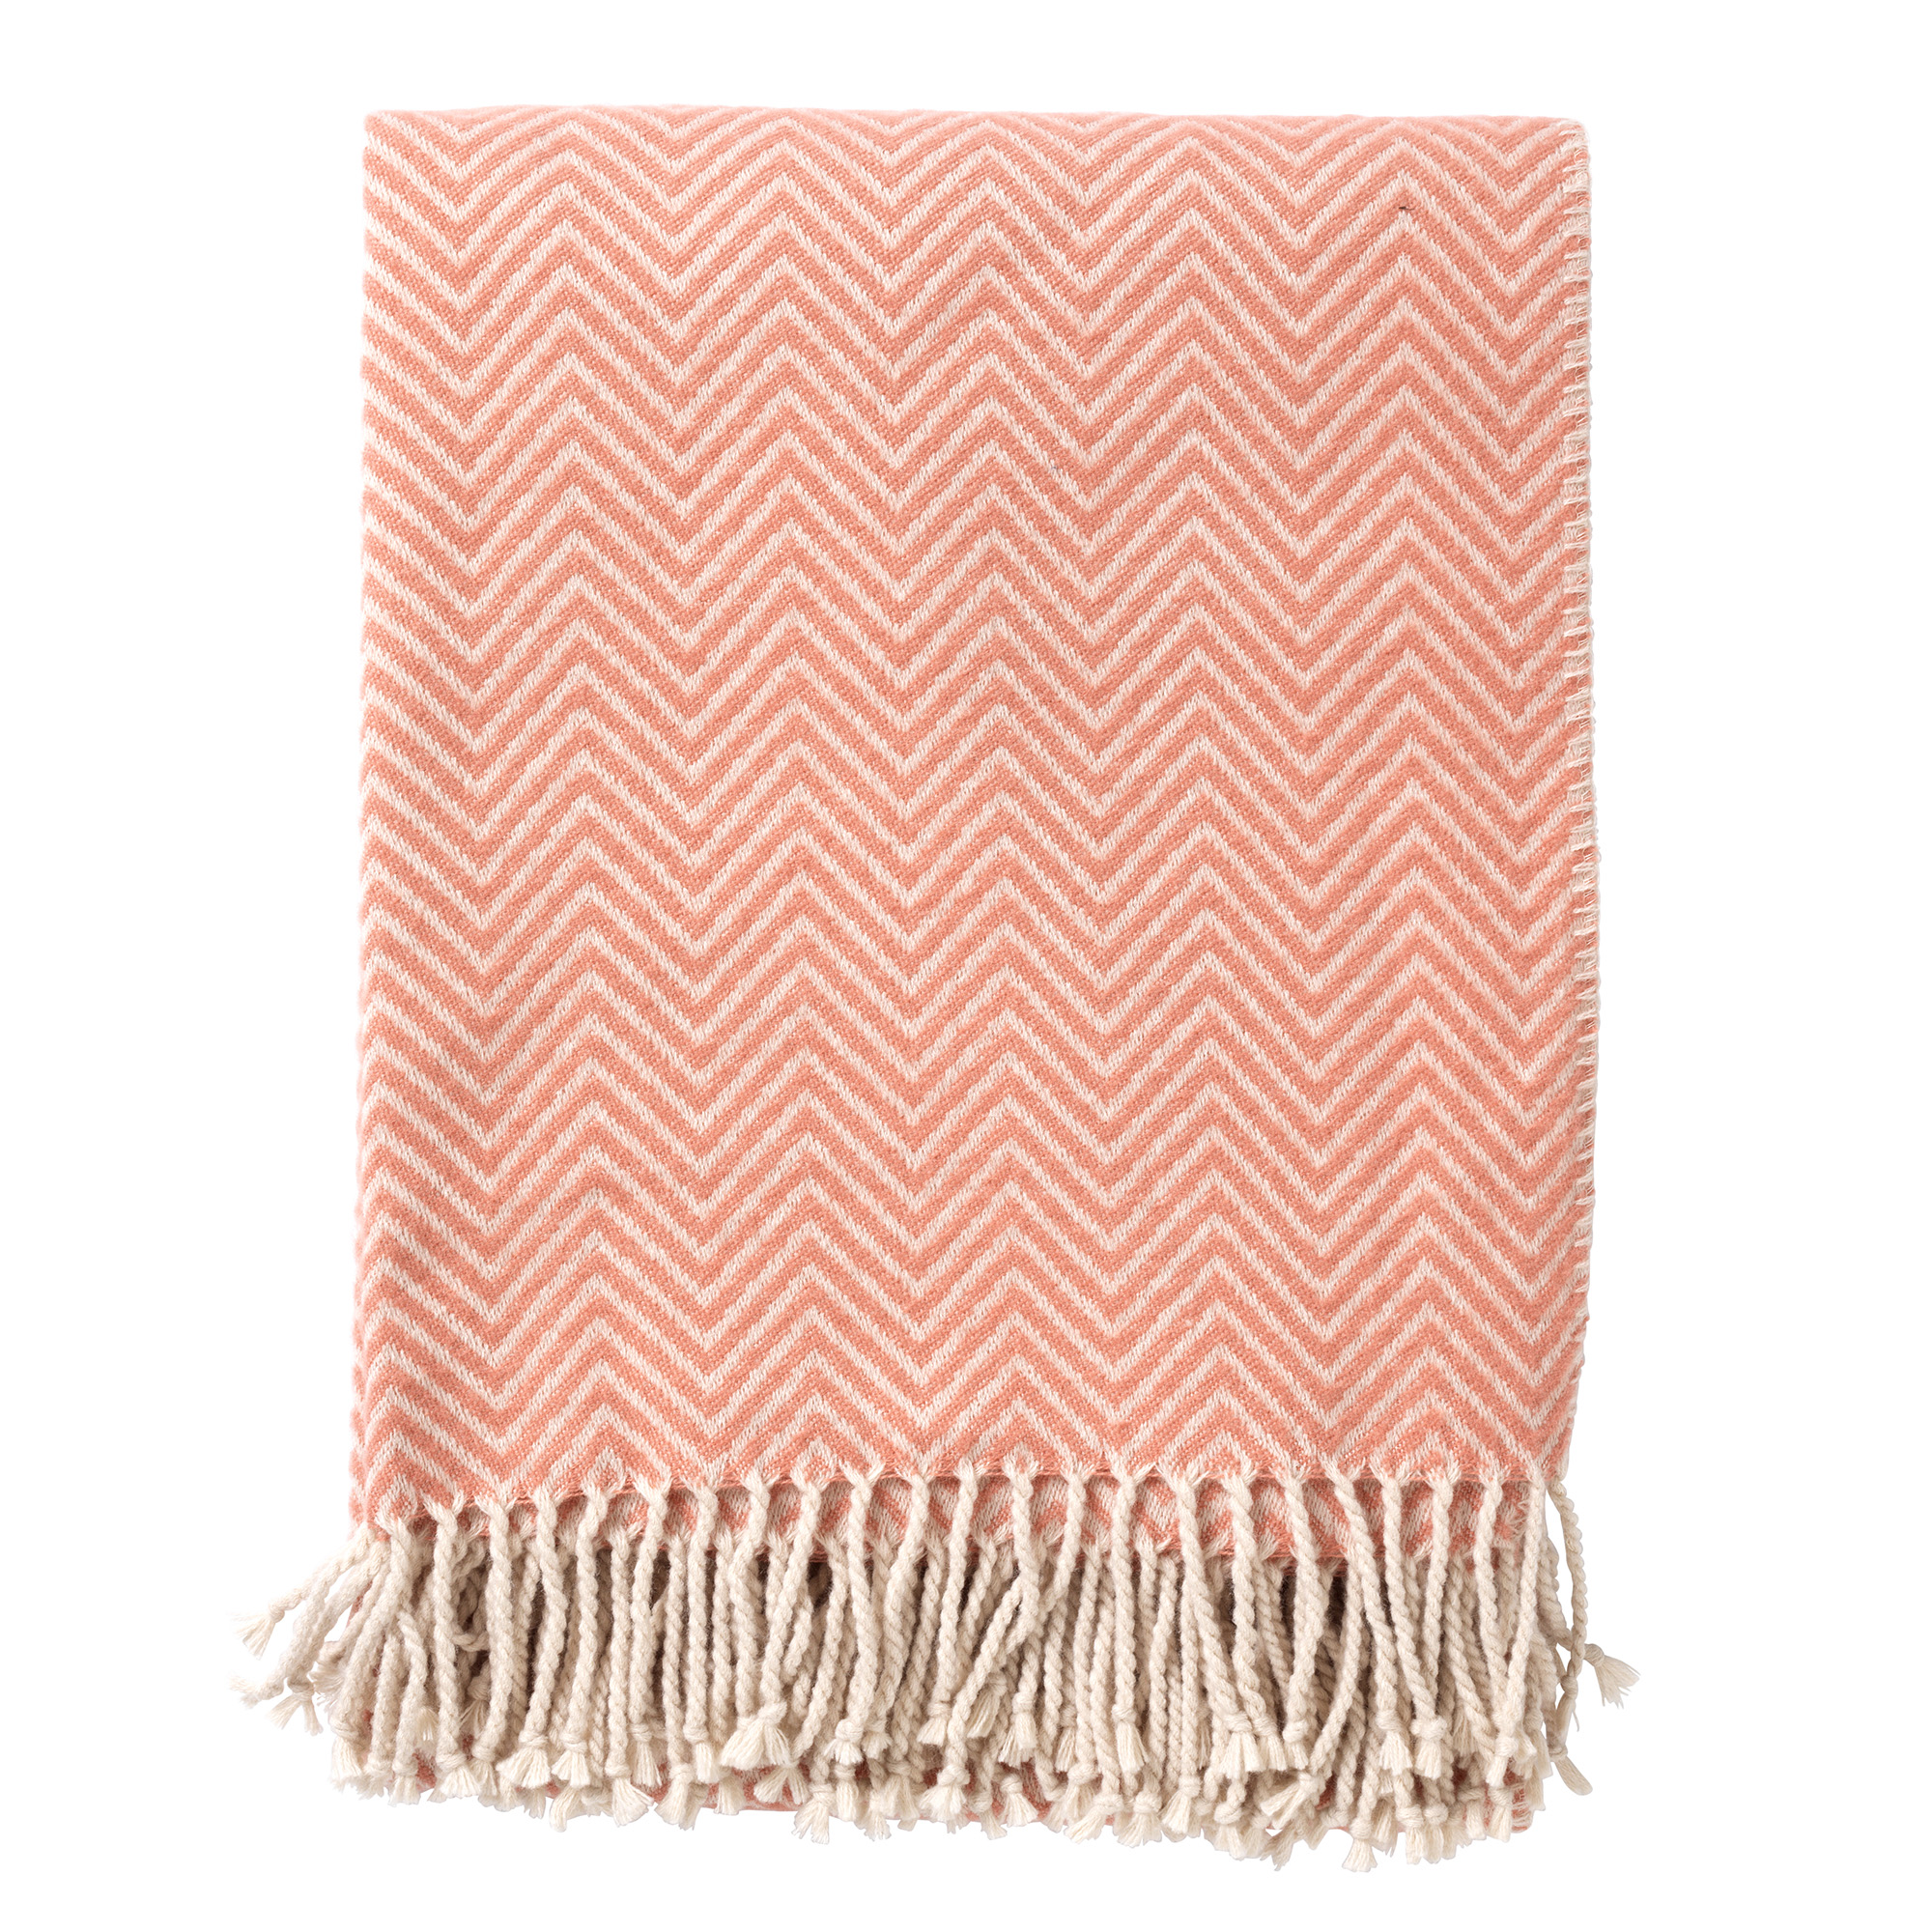 EVONY - Plaid 140 x180 cm - deken met zigzag patroon en franjes - Muted Clay - roze